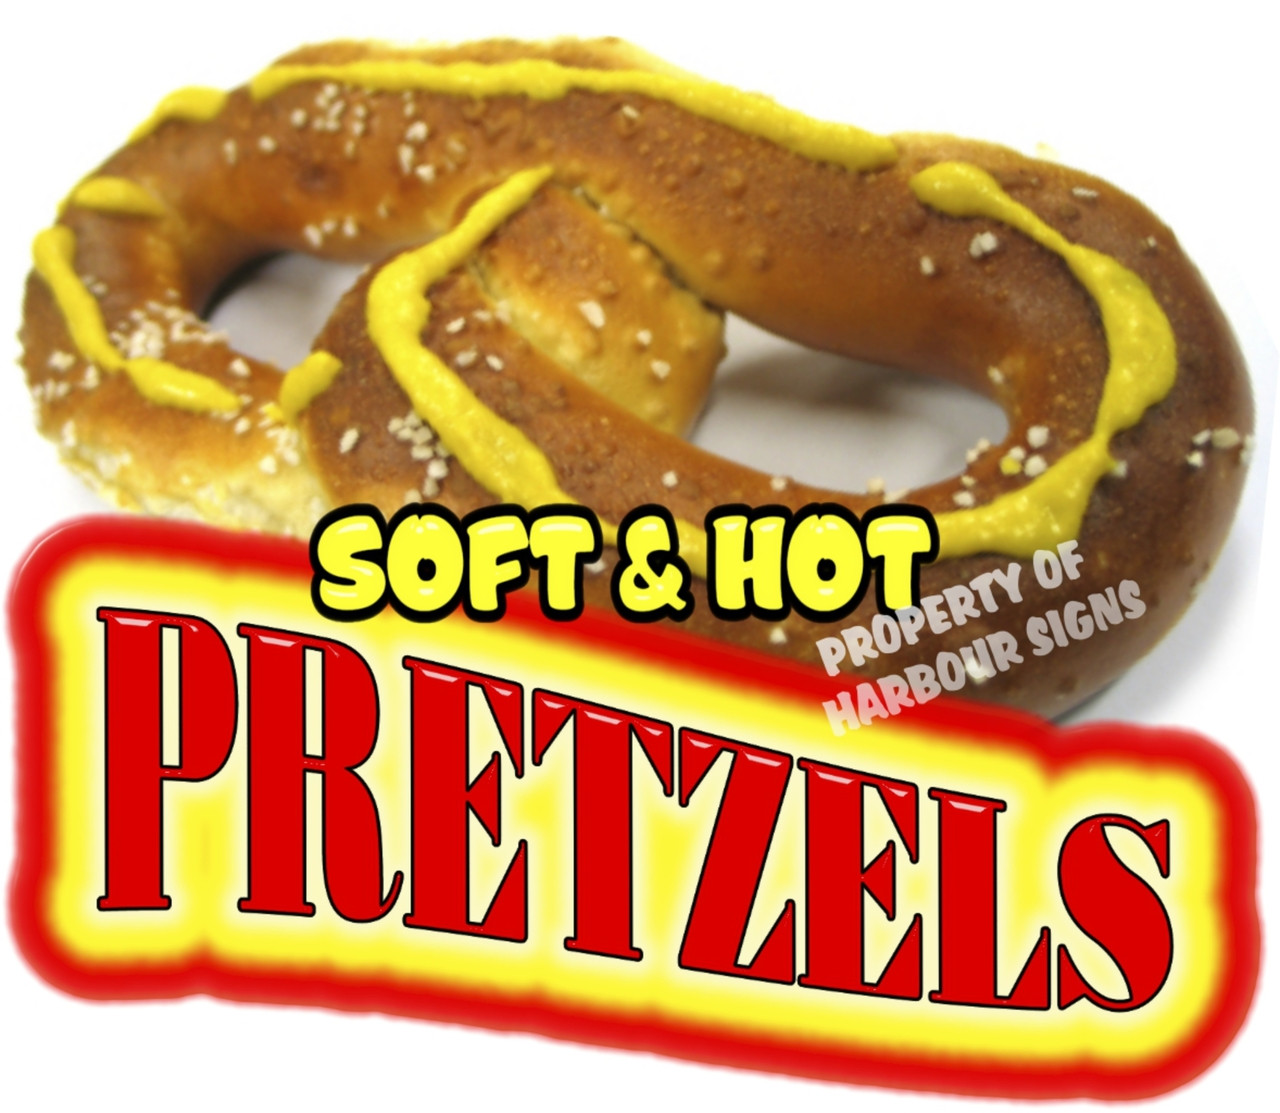 Soft Pretzel Bites DECAL Food Truck Concession Sticker Choose Your Size 